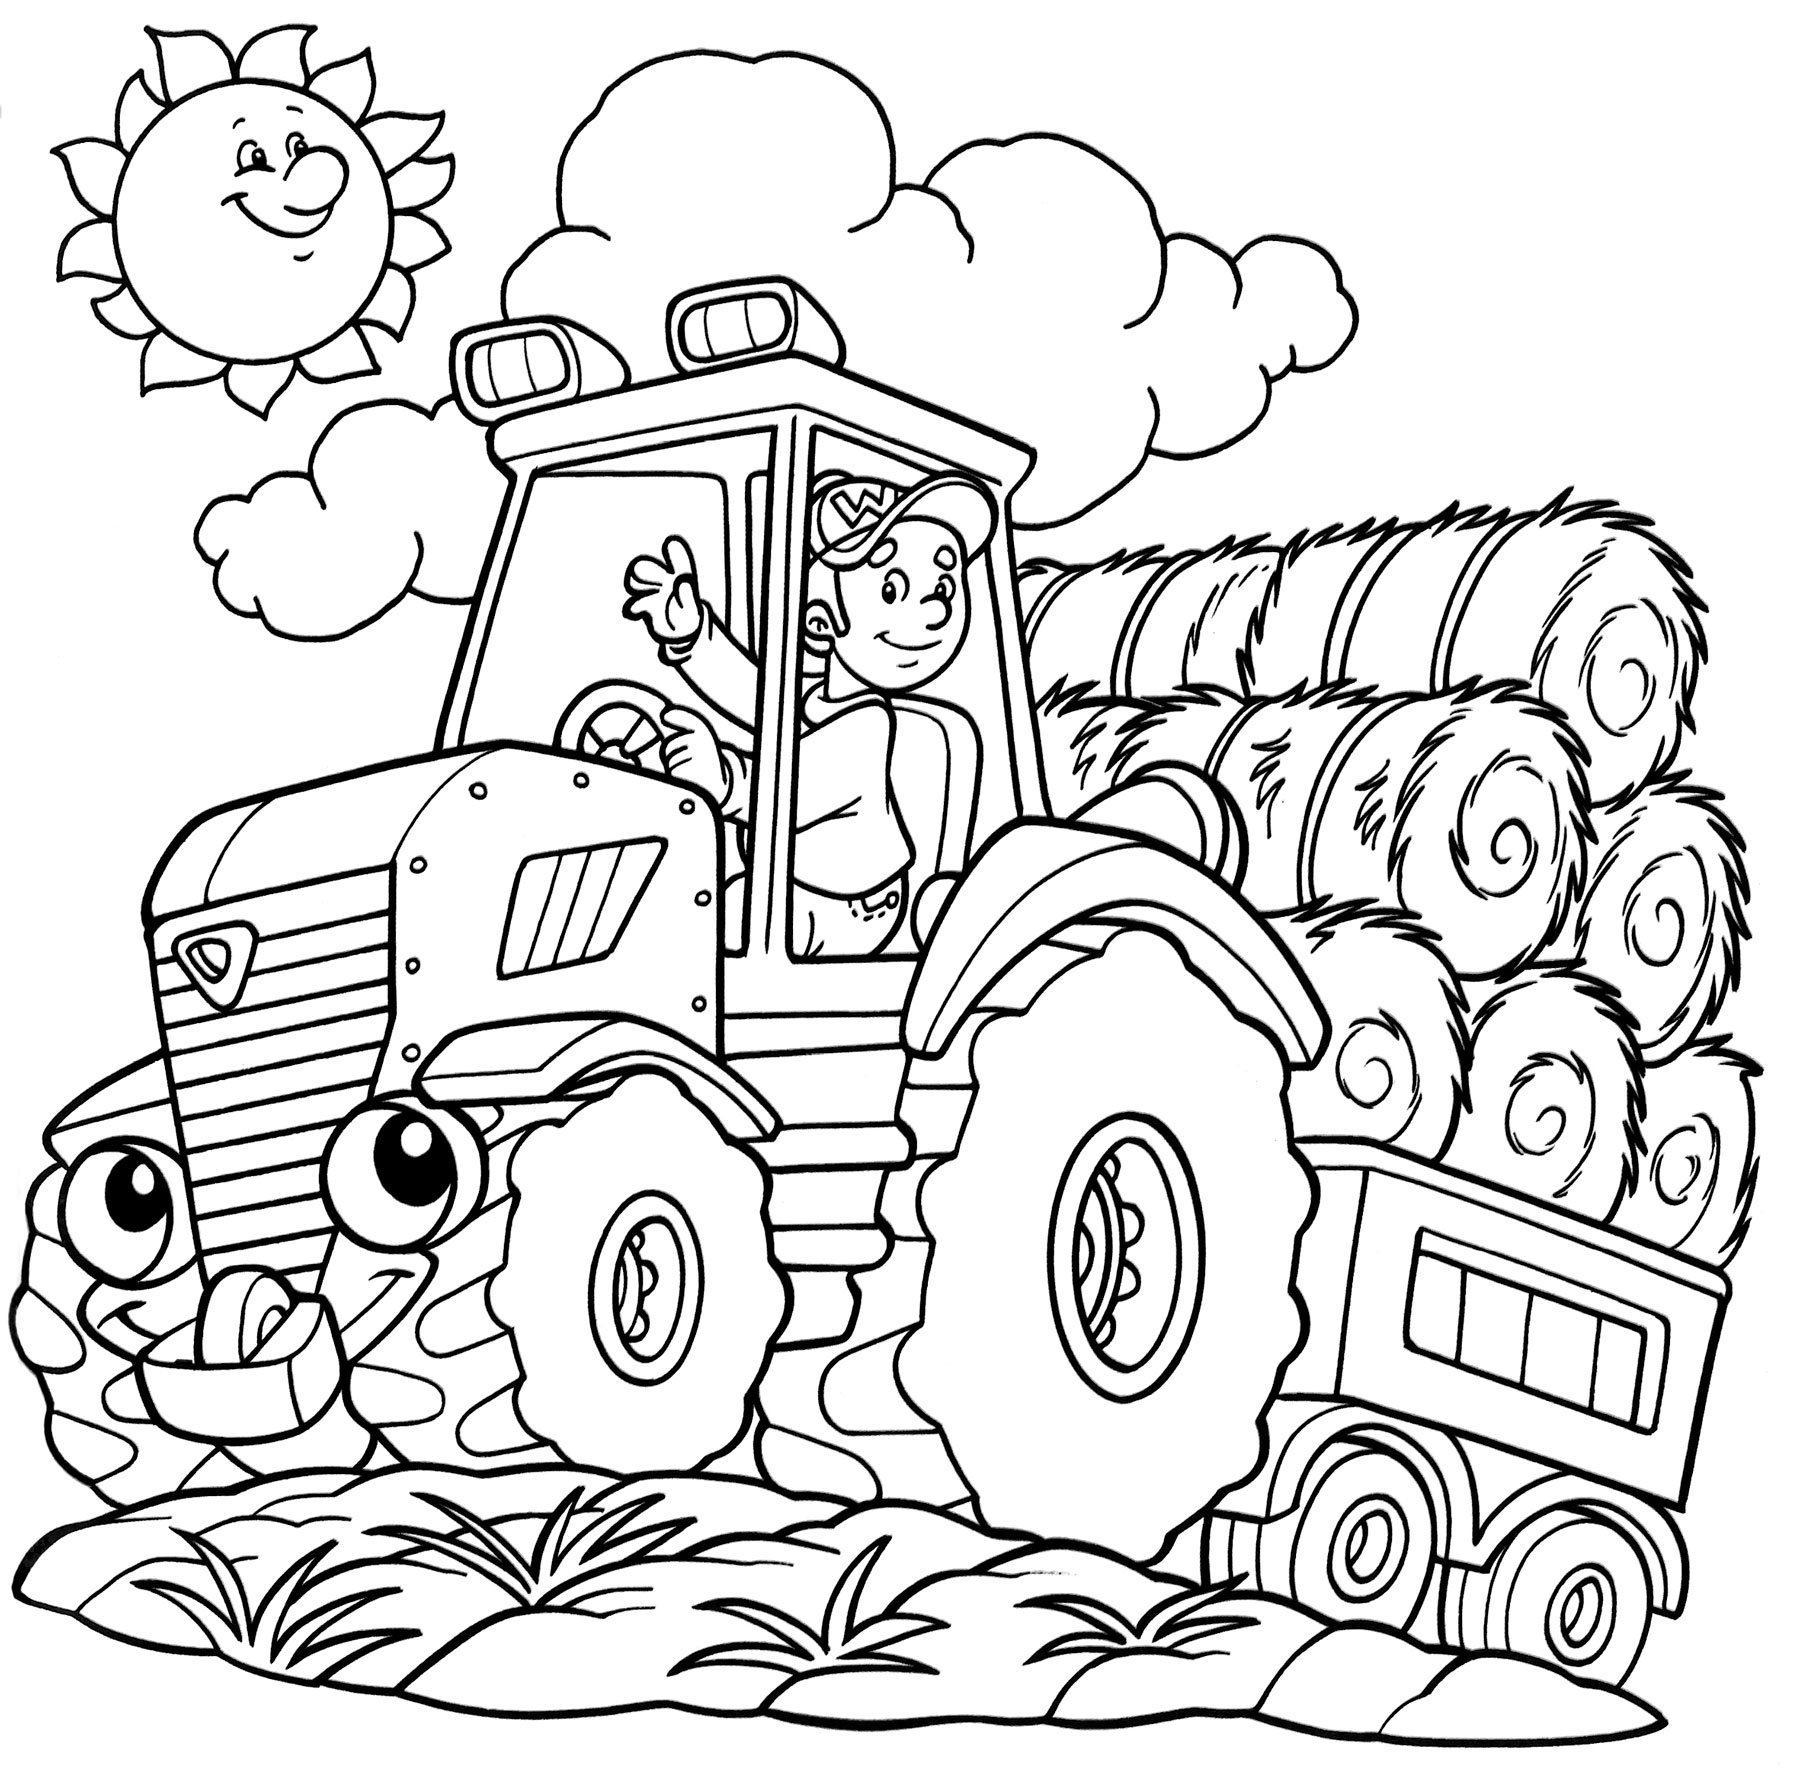 Трактор раскраска для детей 6 7 лет. Раскраска трактор. Раскраска для малышей. Трактор. Раскраски для мальчиков трактор. Раскраска машинки трактор.